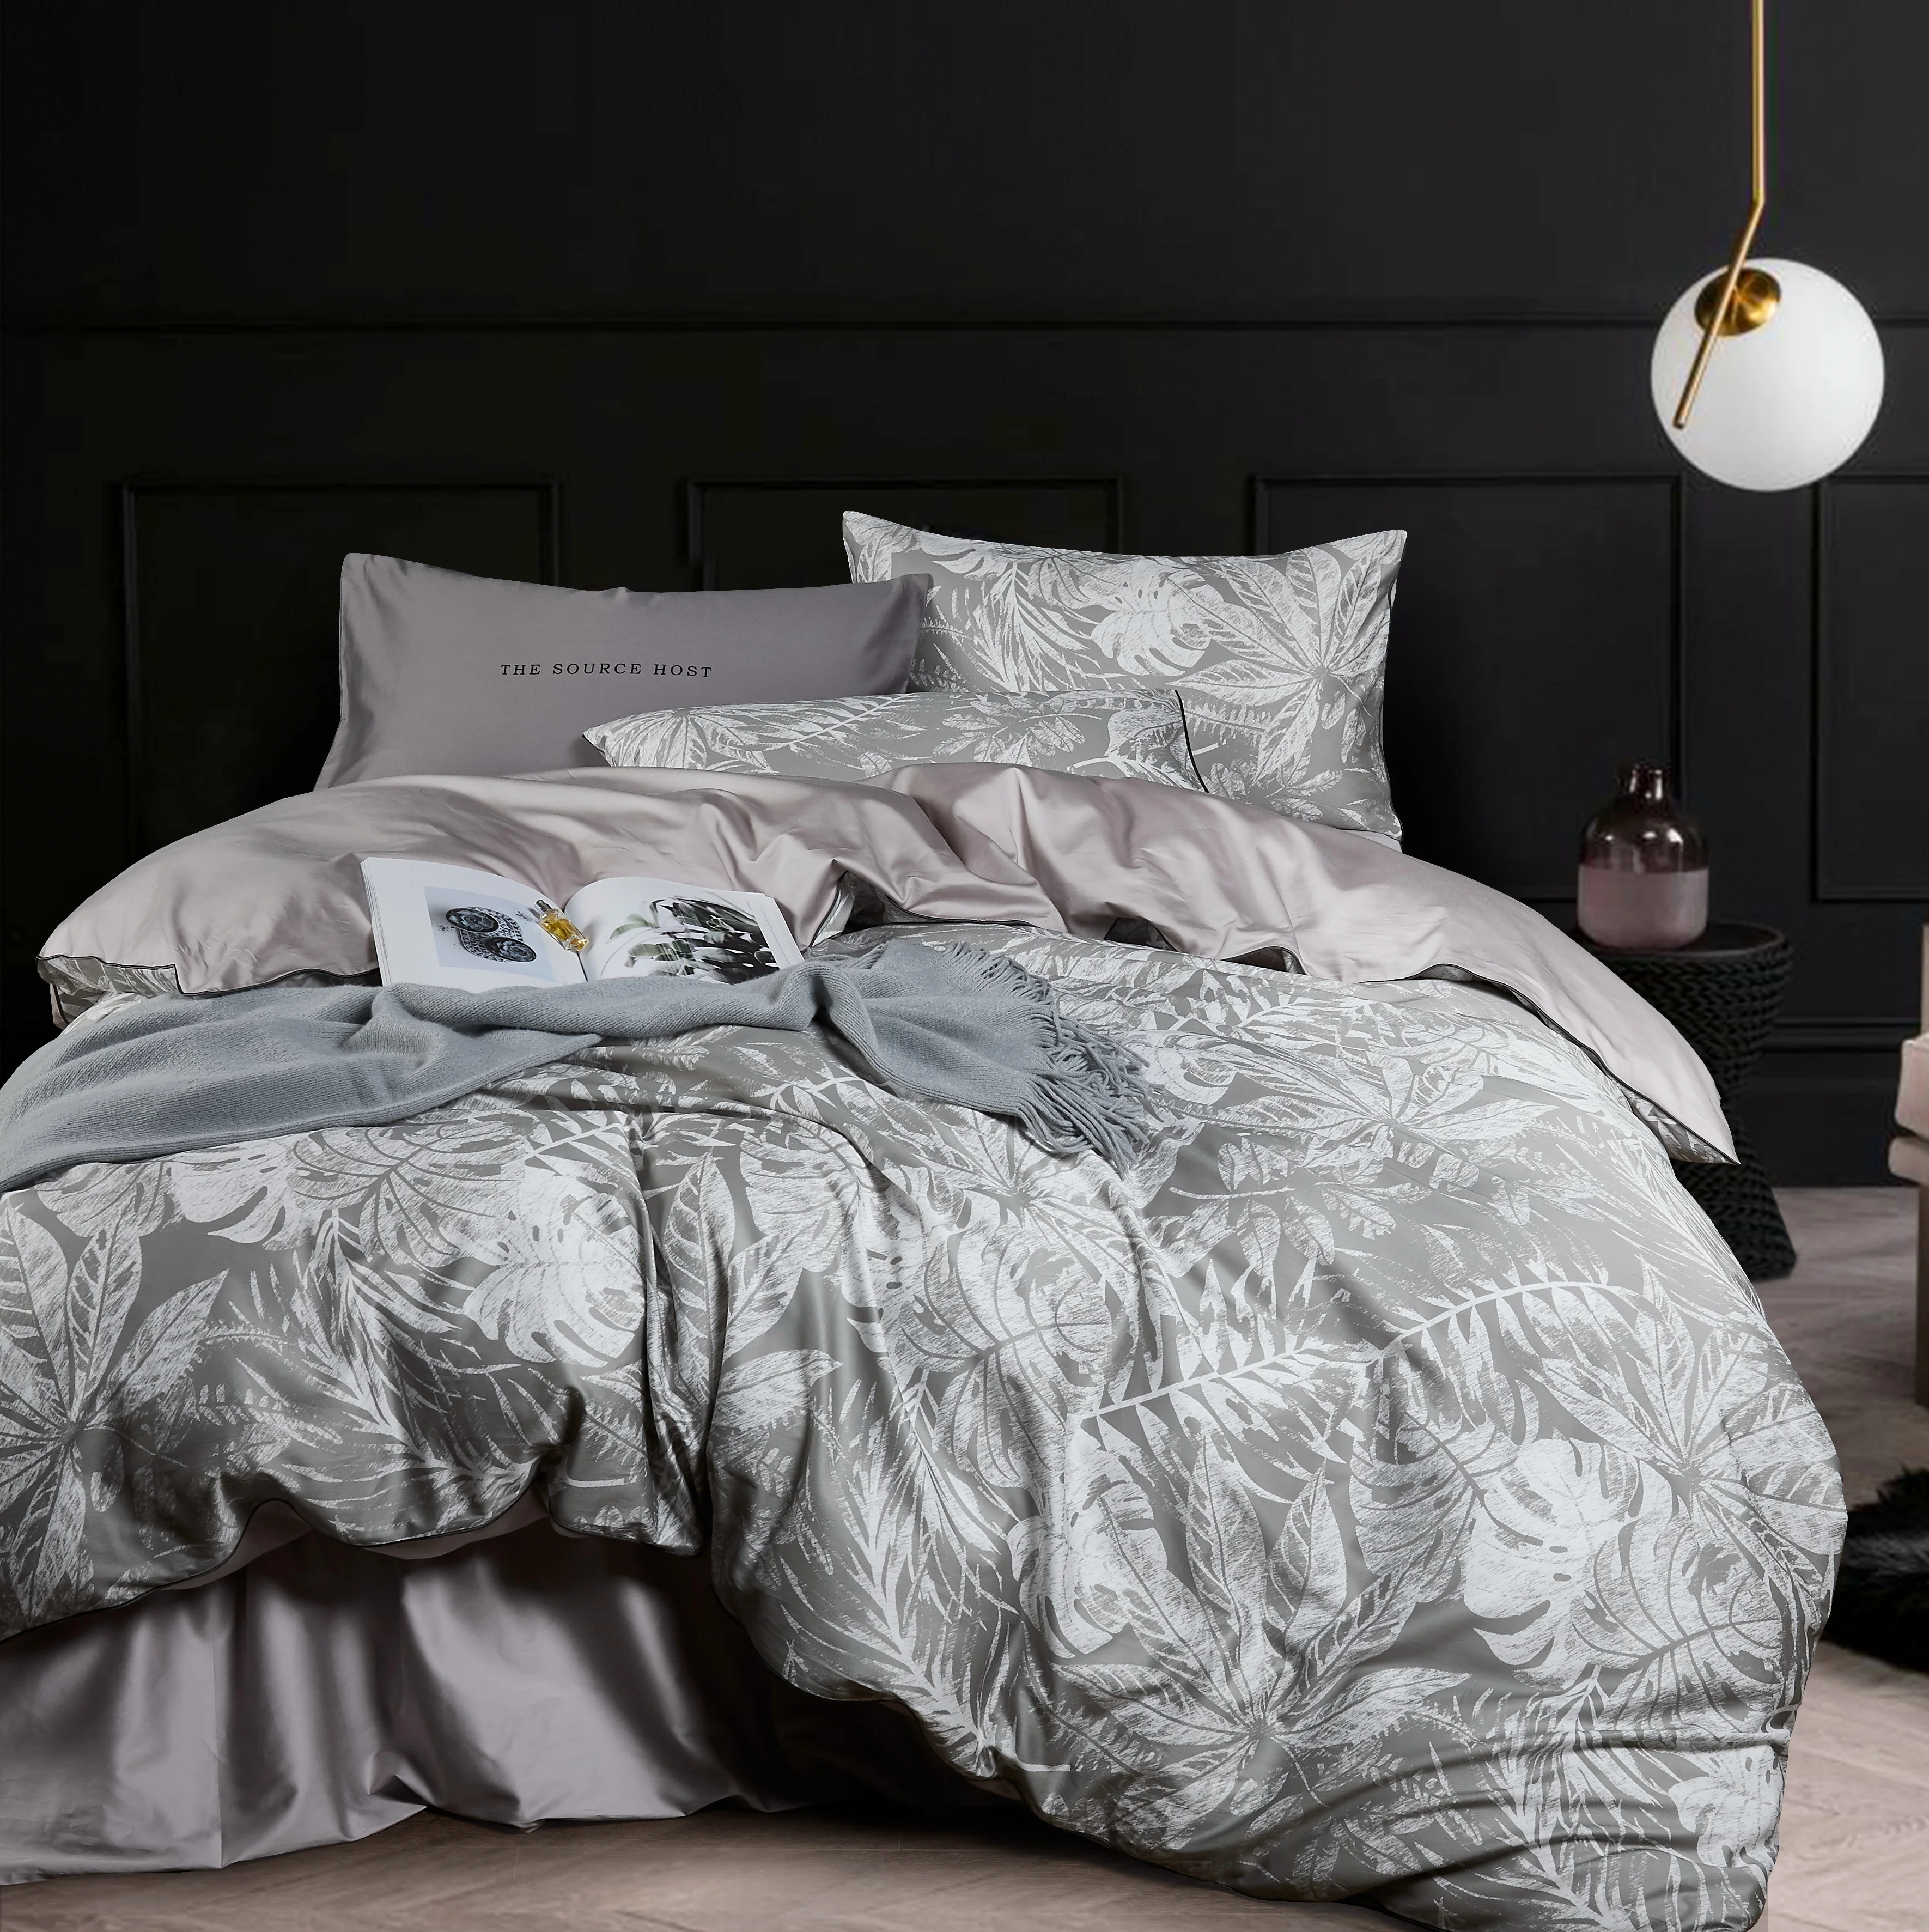 Hot sale 100% cotton sateen bedding set customized reactive printed bedline duvet cover set